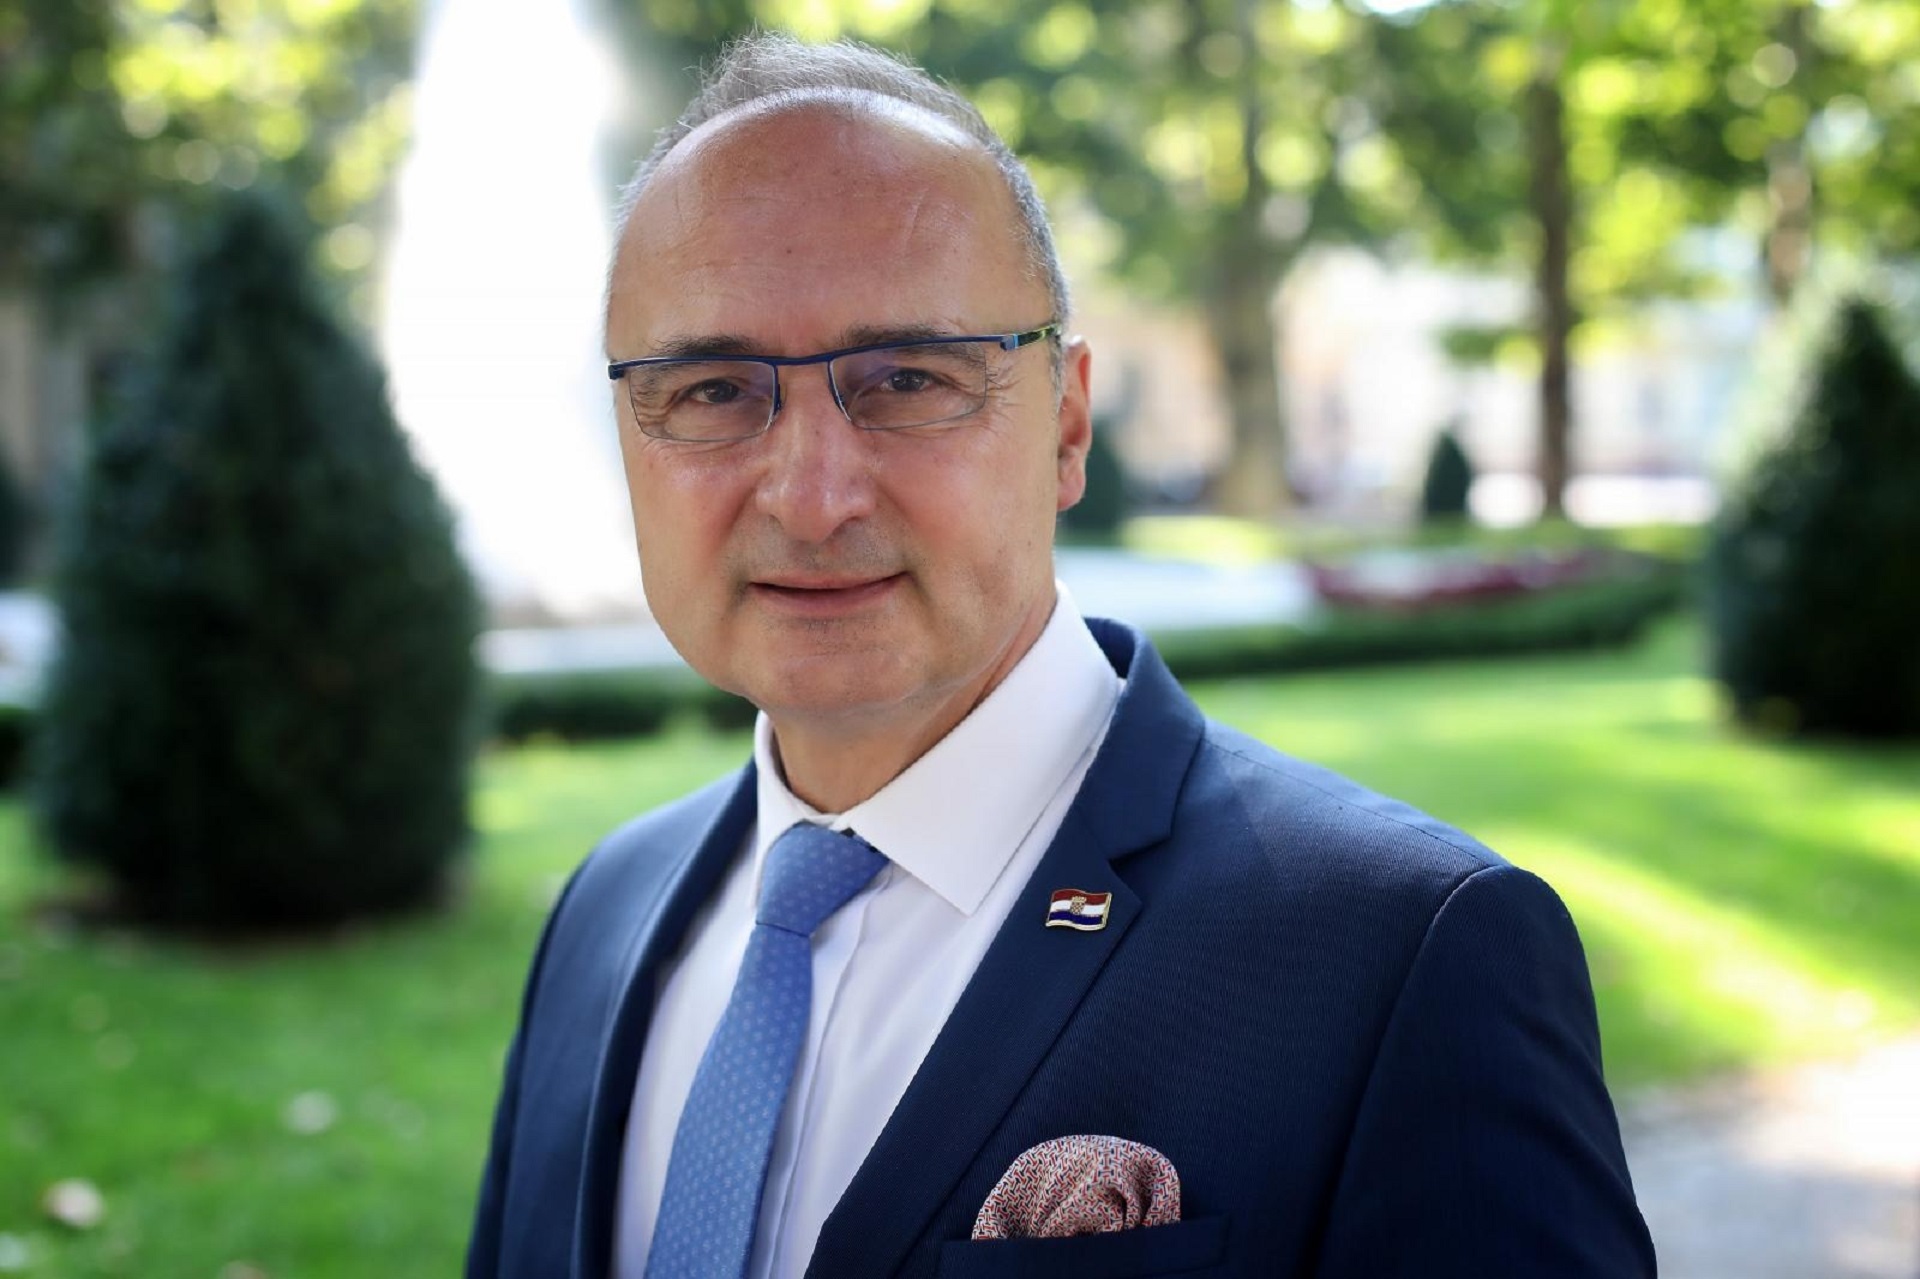 30.07.2020., Zagreb - Ministar vanjskih i europskih poslova, Goran Grlic Radman. Photo: Boris Scitar/Vecernji list/PIXSELL